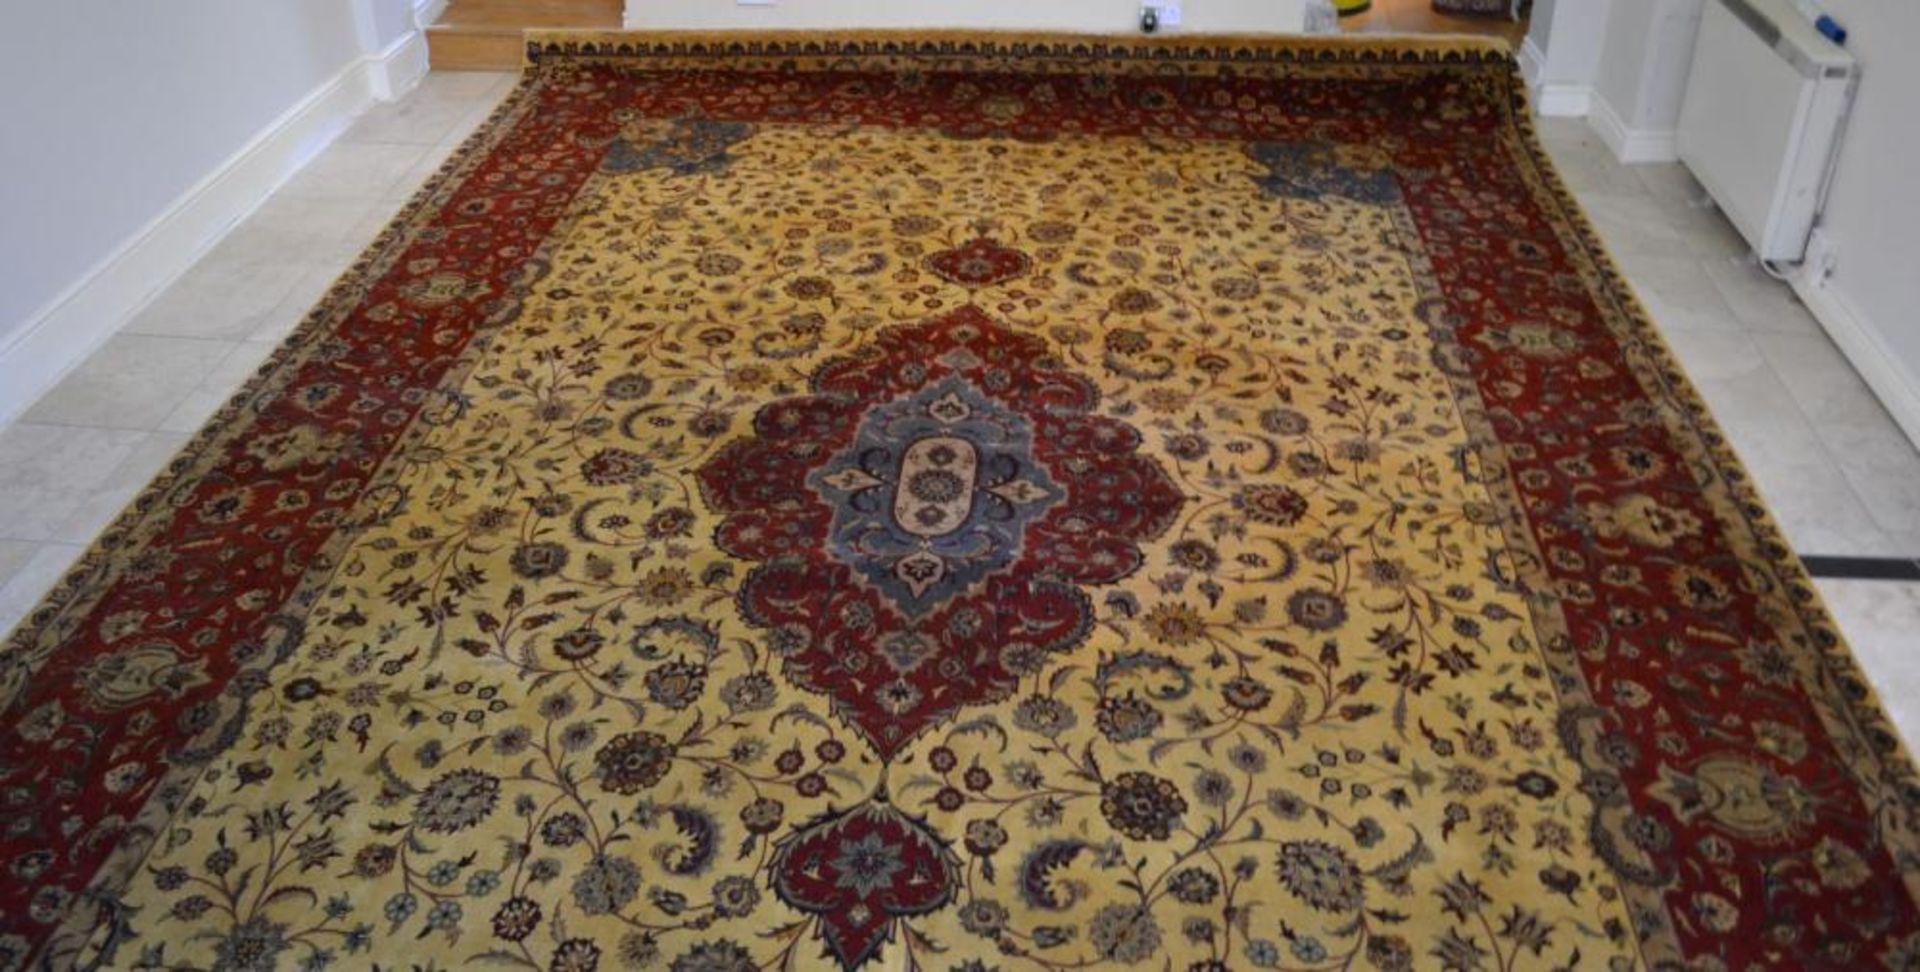 1 x Very Fine Top Quality Pakistan Tabriz Design Carpet - 320 Knot Count - Dimensions: 546x376cm - N - Image 4 of 31